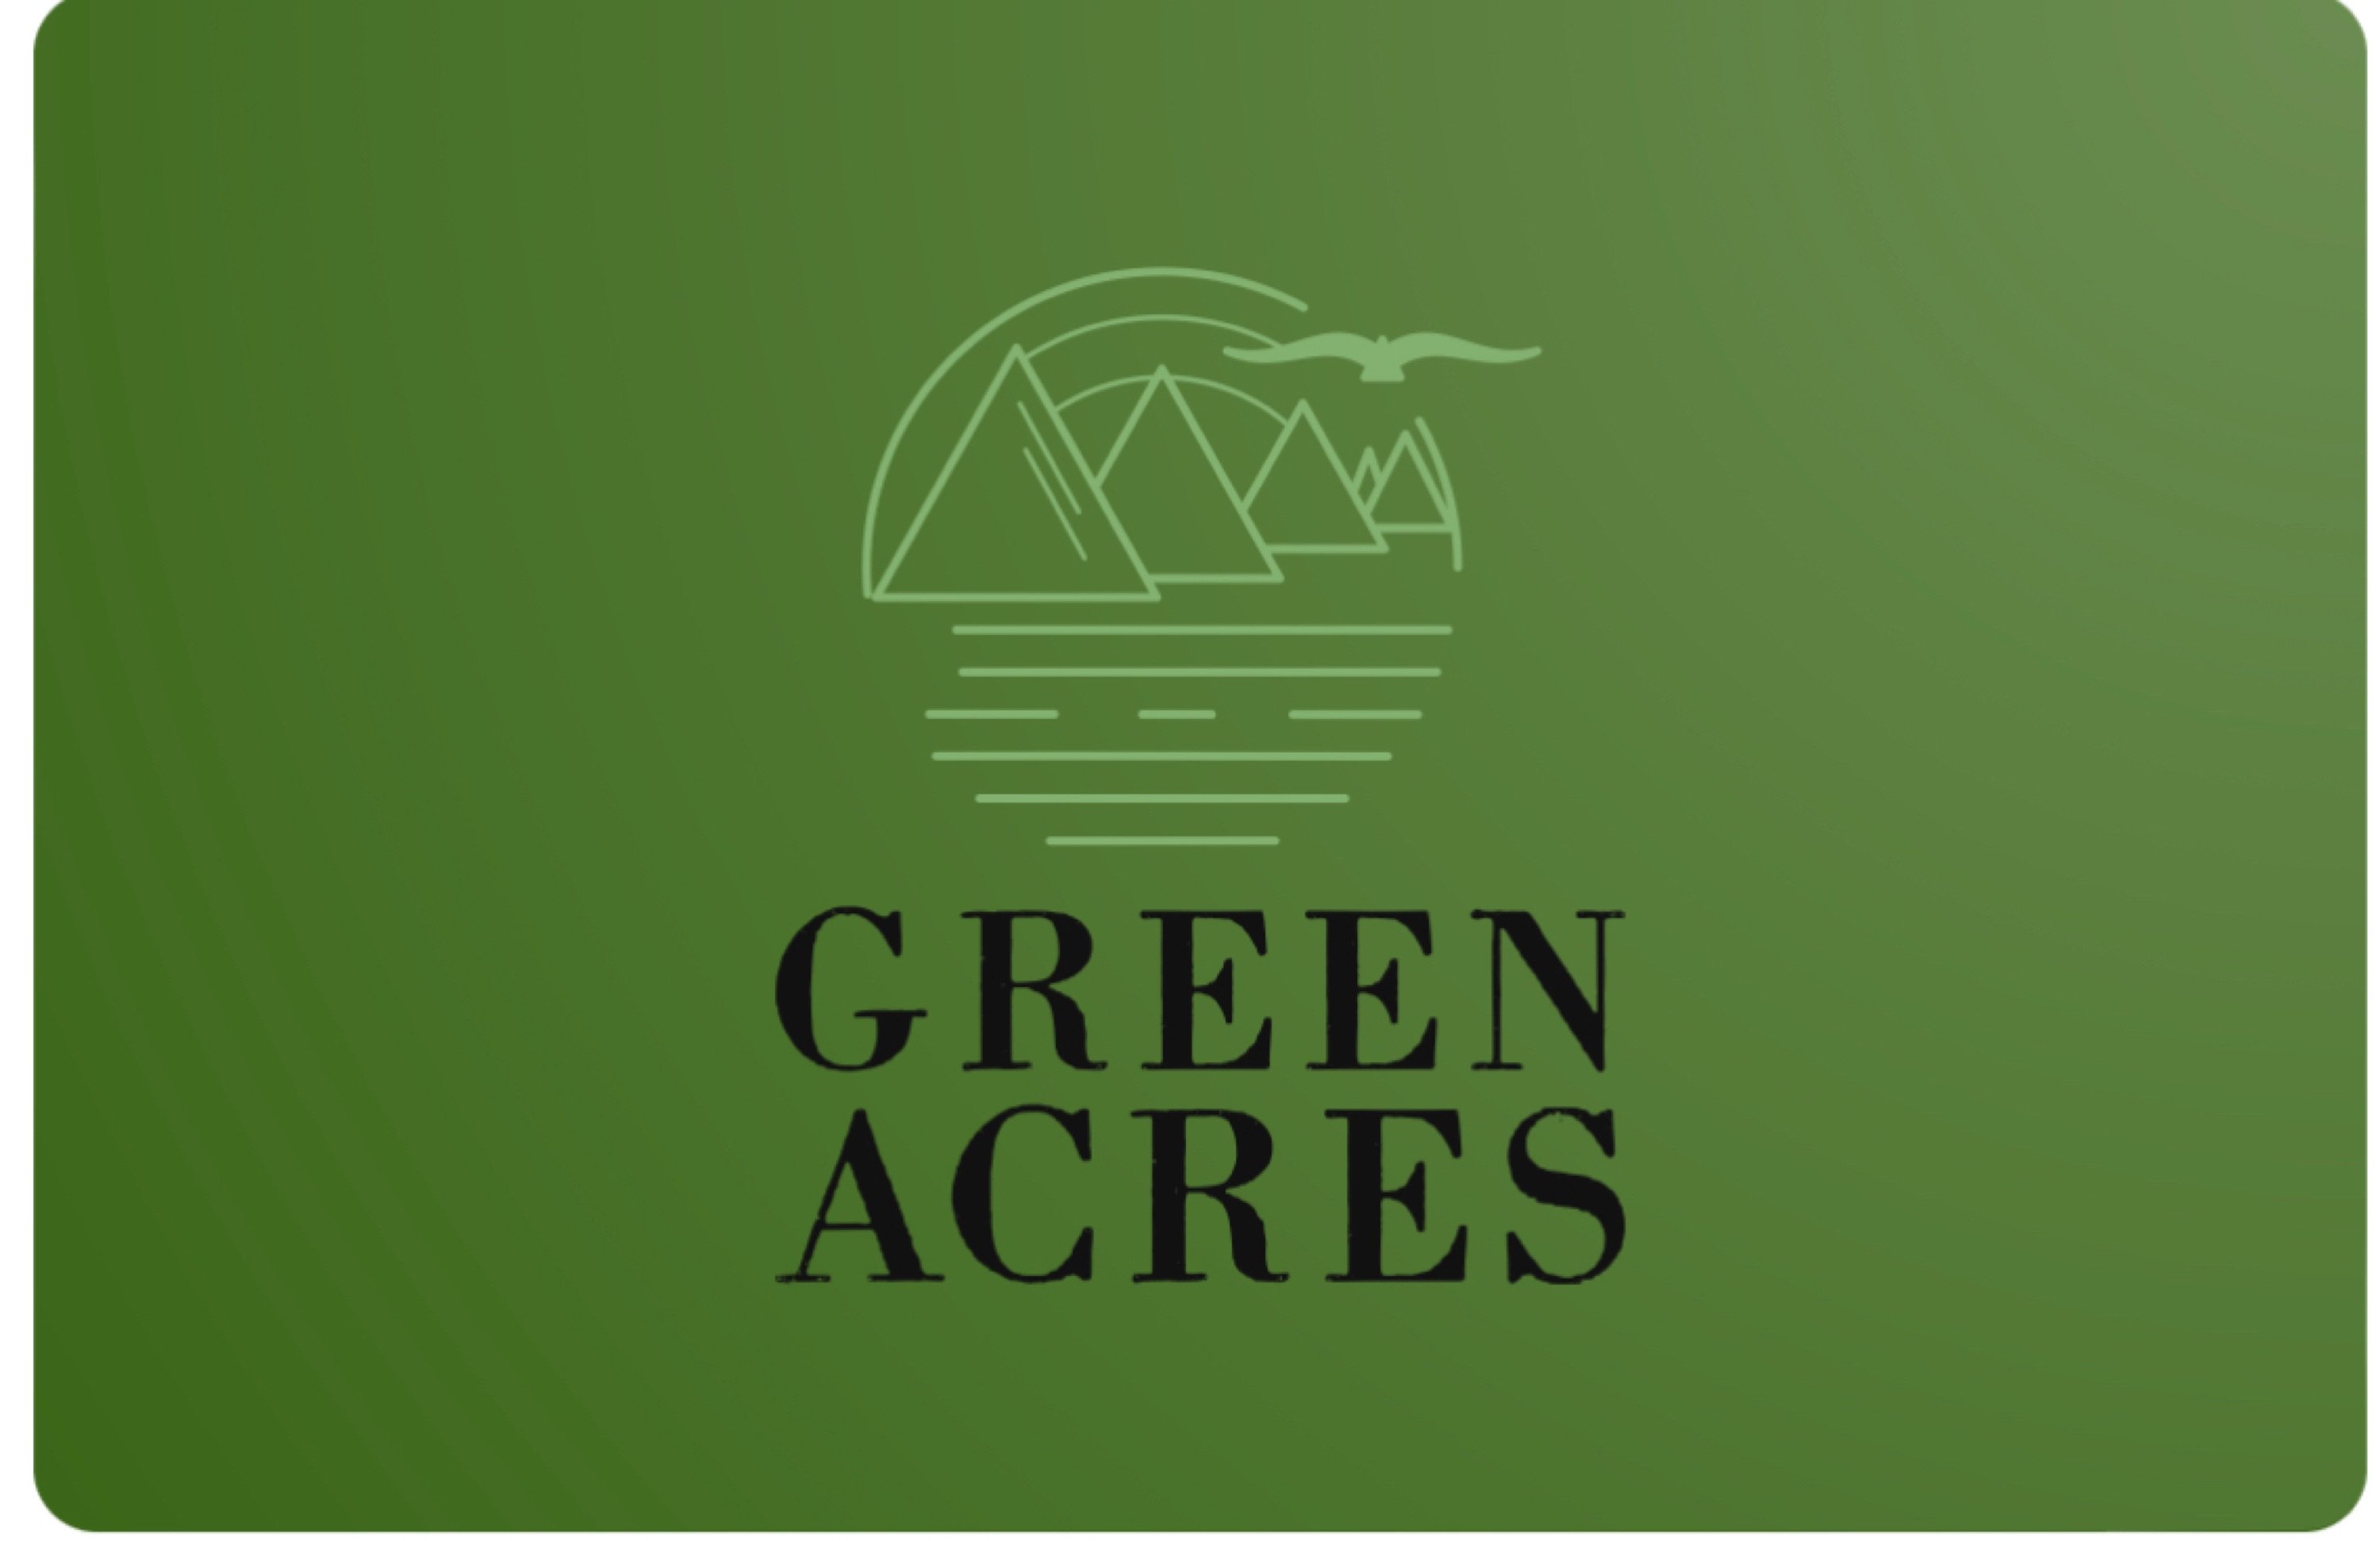 Green Acres Landscaping Logo